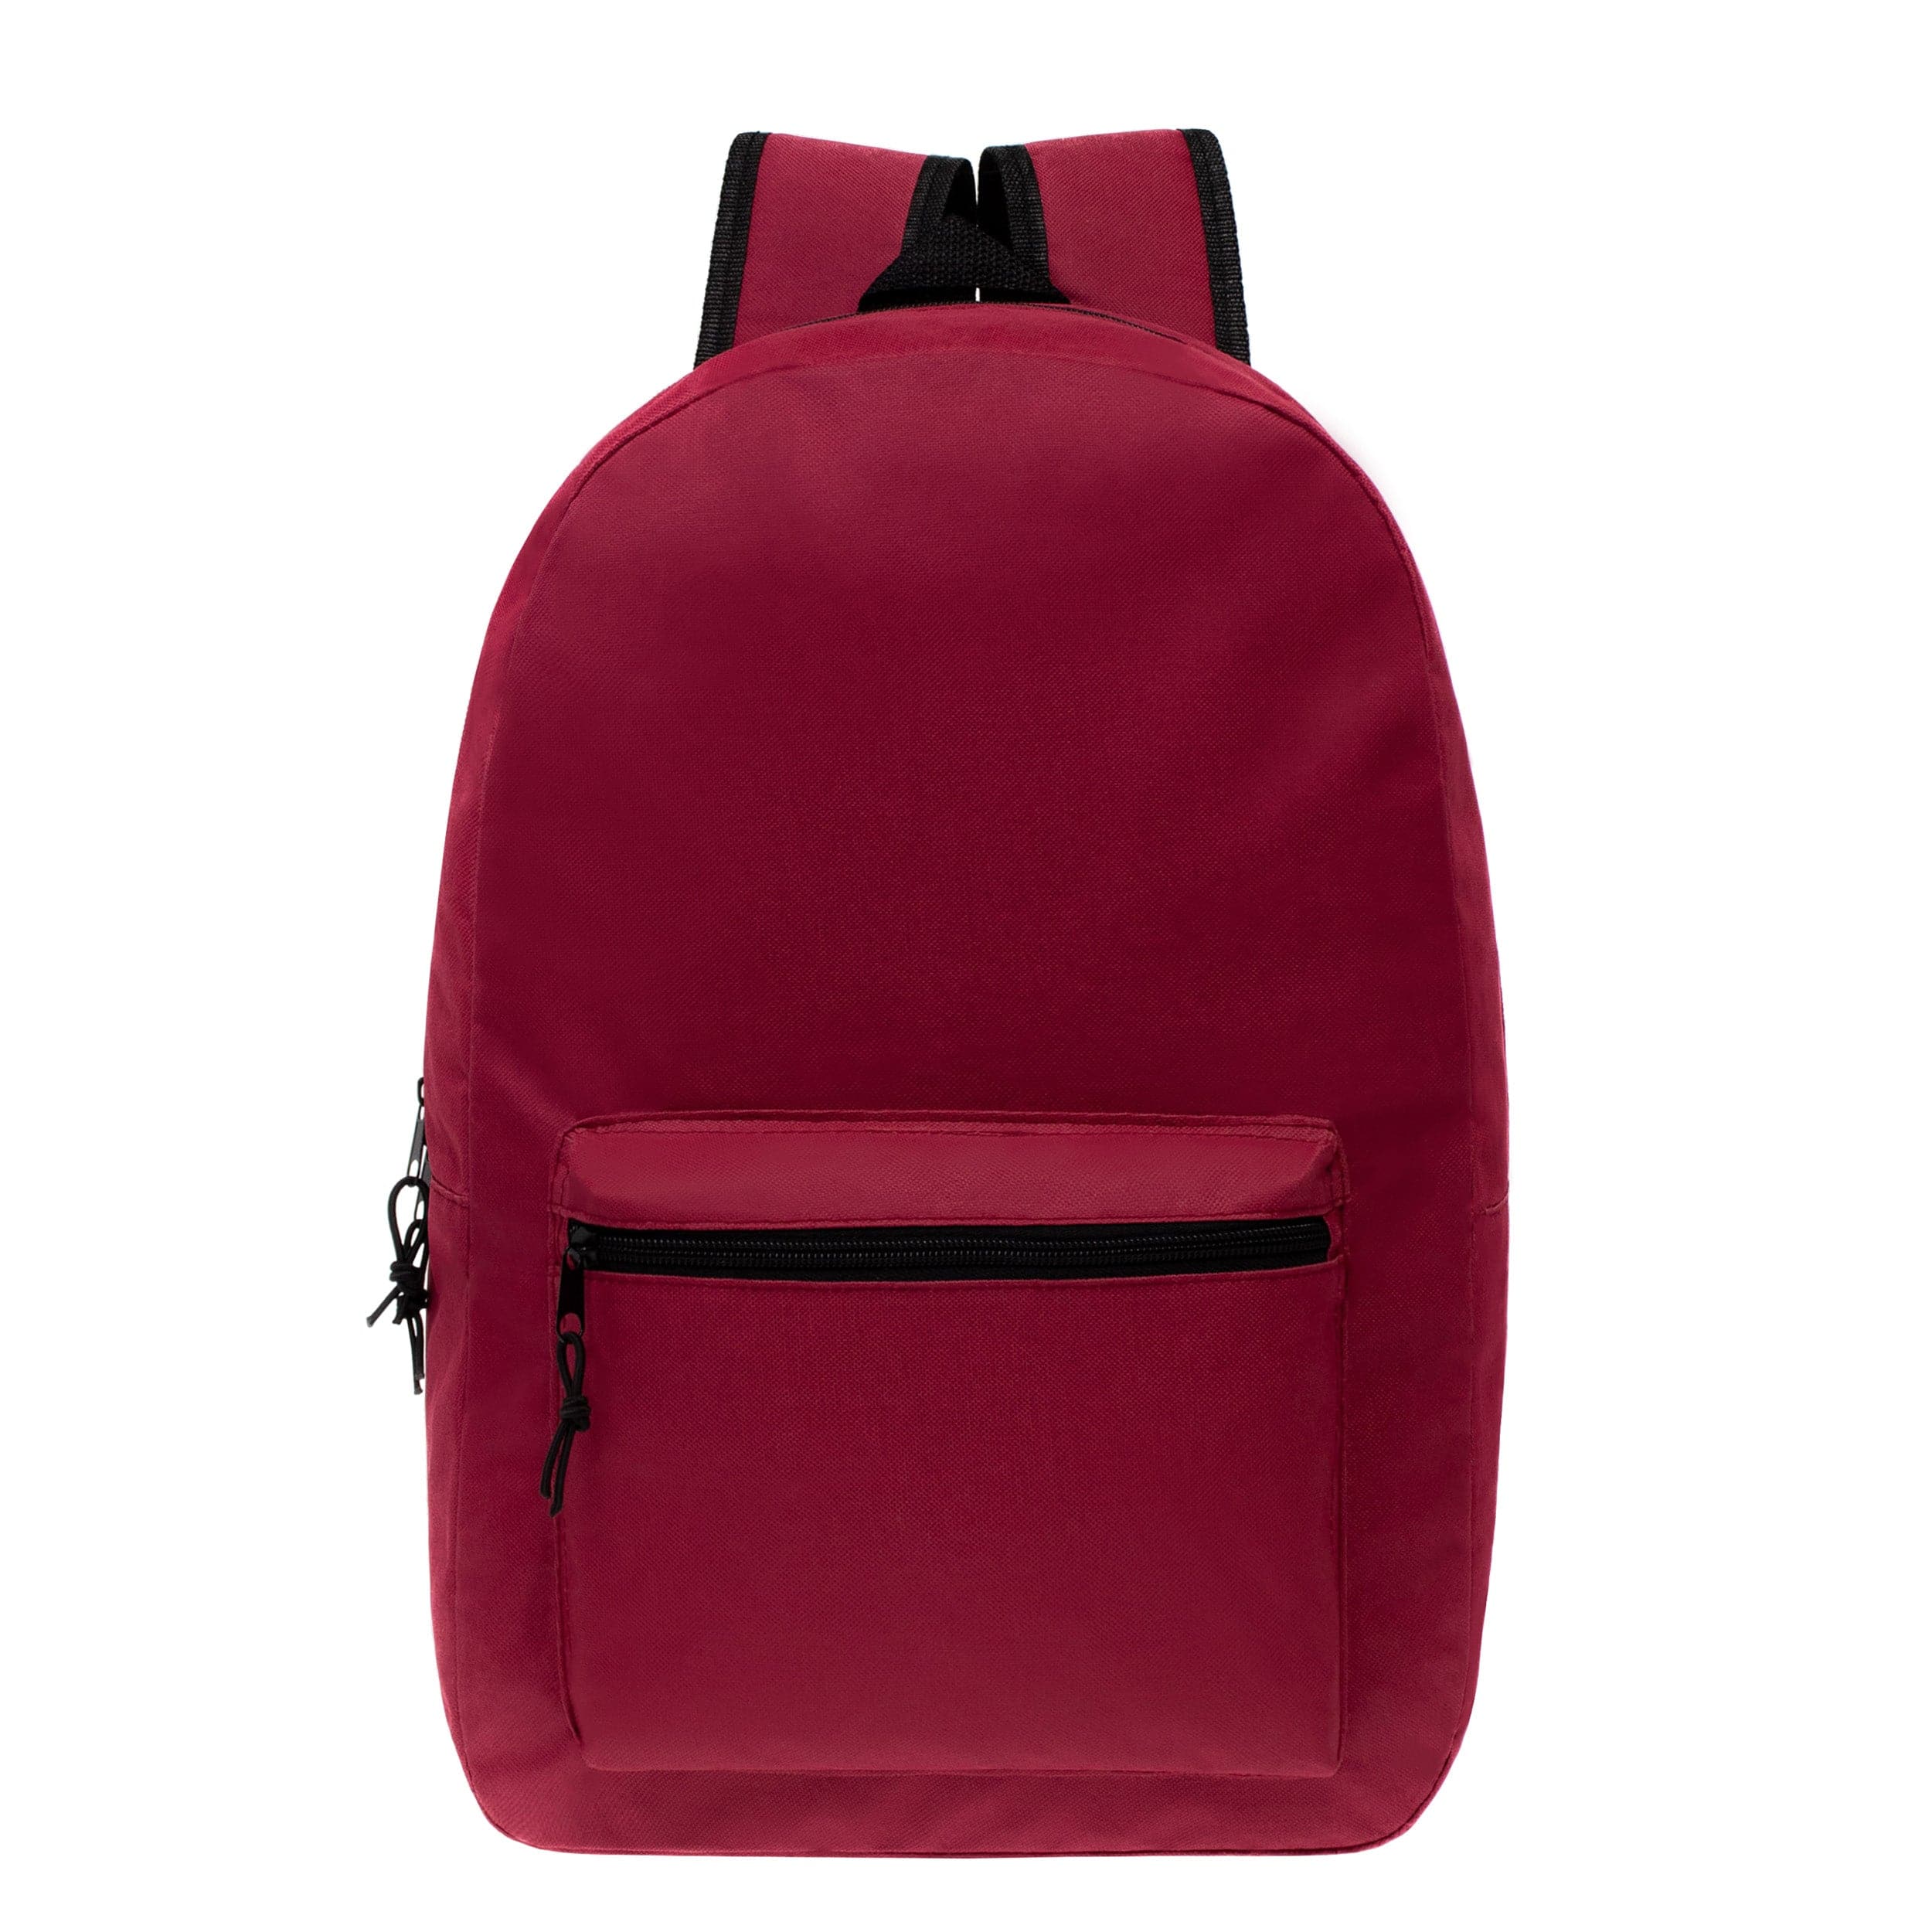 15" Kids Basic Wholesale Backpack in 6 Colors - Bulk Case of 24